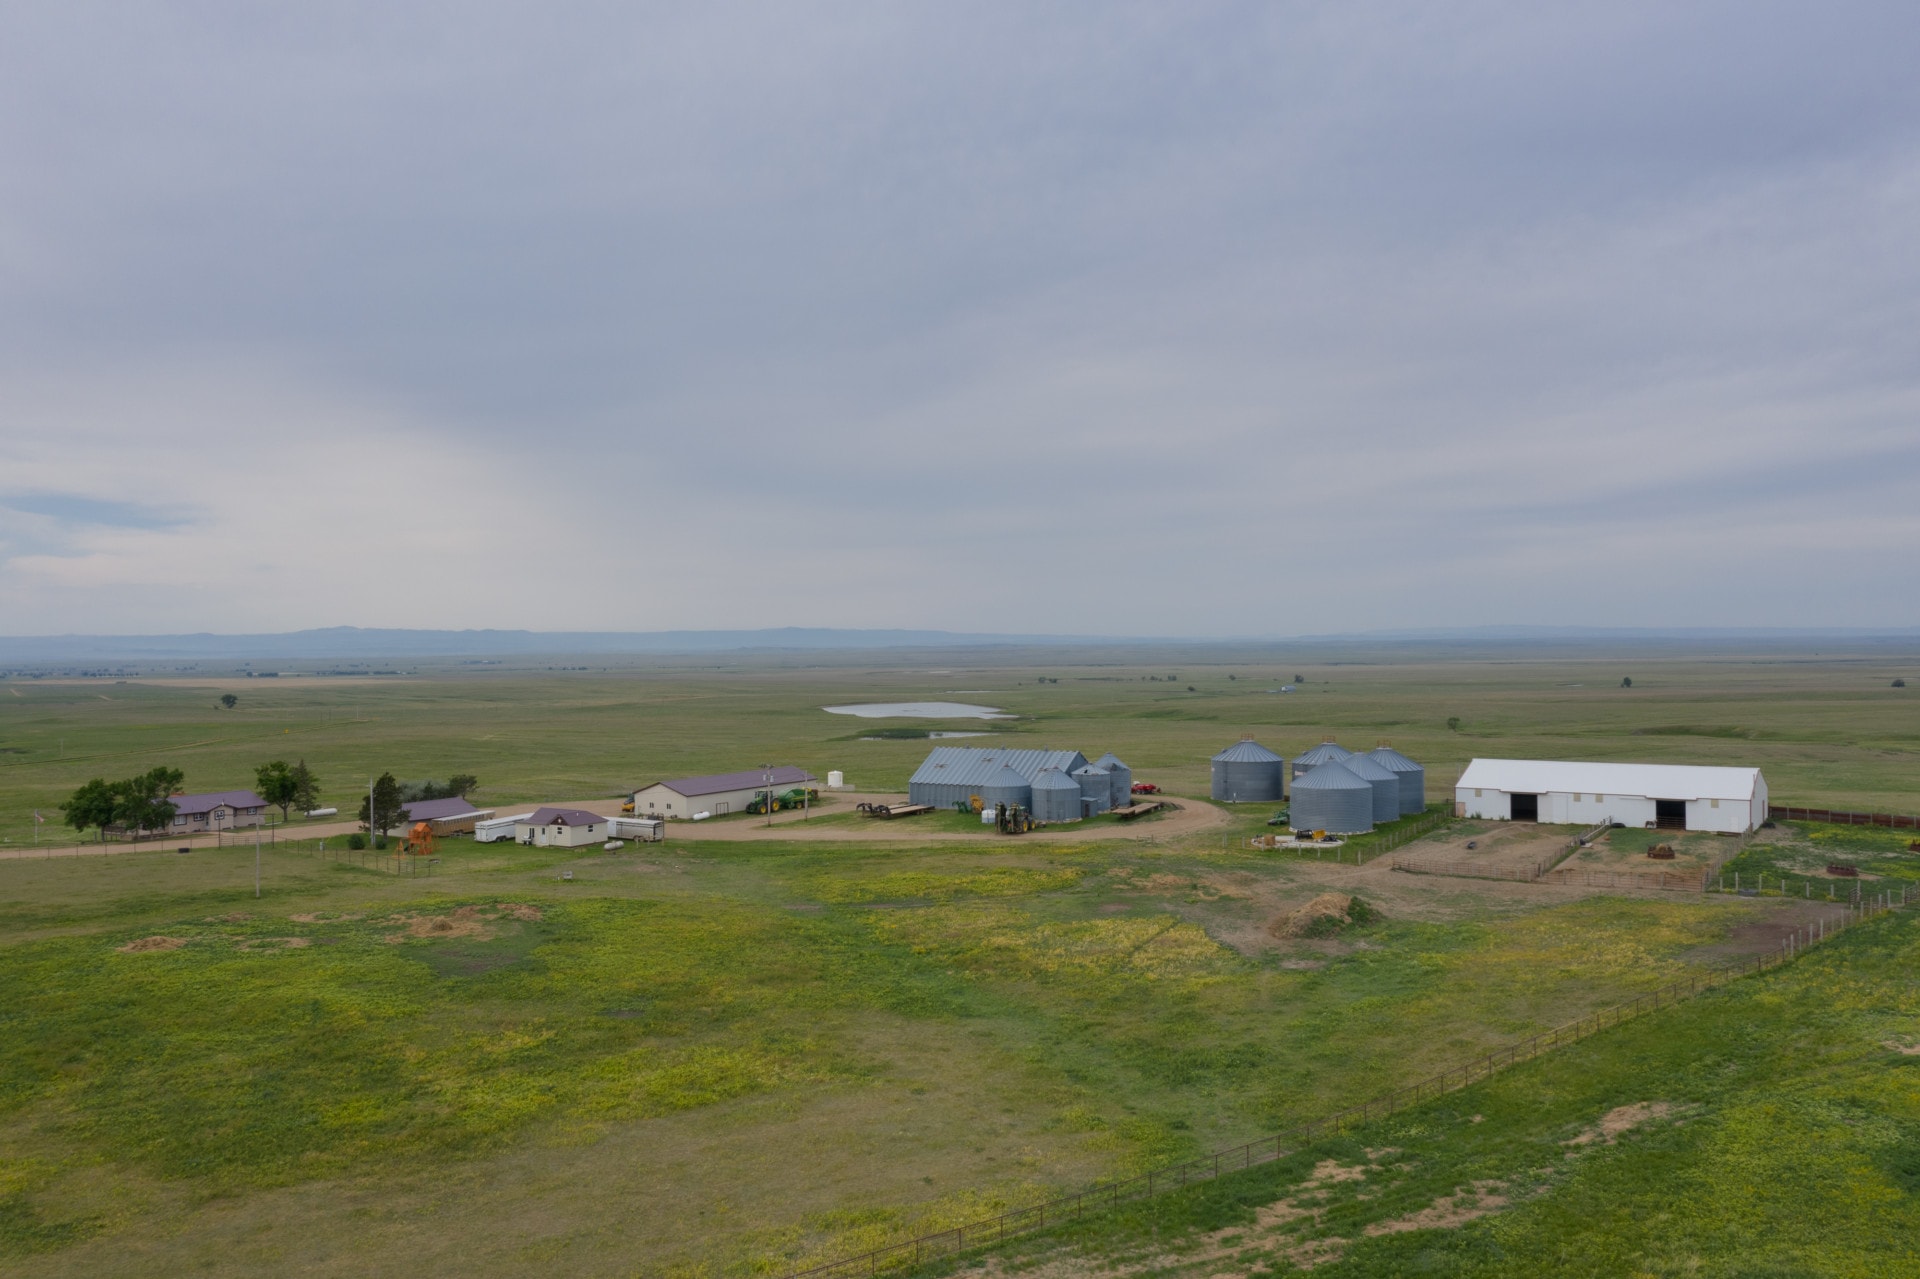 ranch headquarters south dakota northern plains grassland cattle ranch